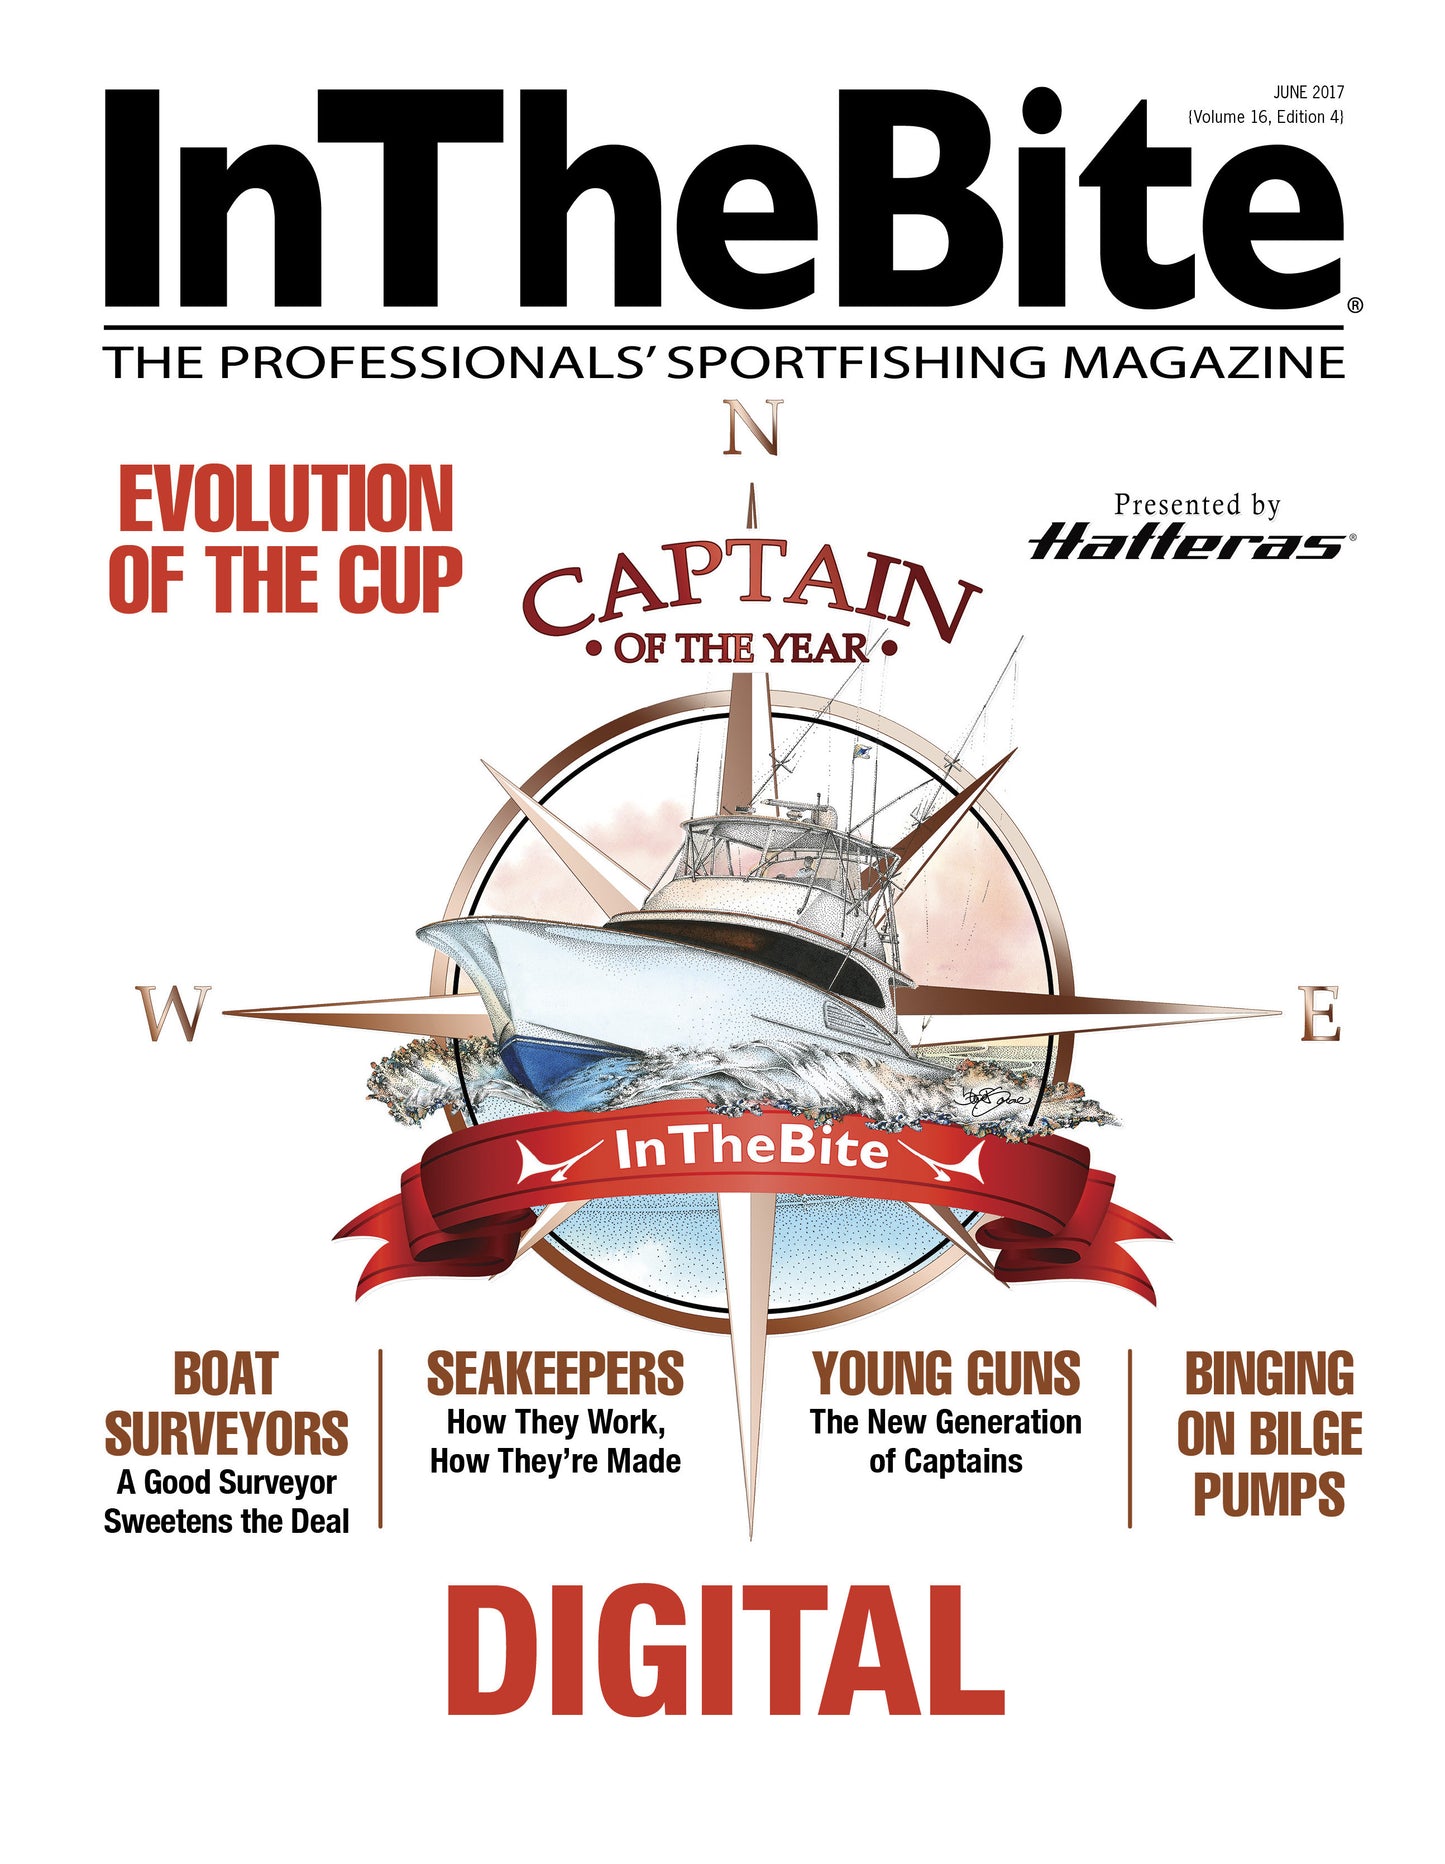 InTheBite Volume 16 Edition 04 - June 2017 - Digital Edition